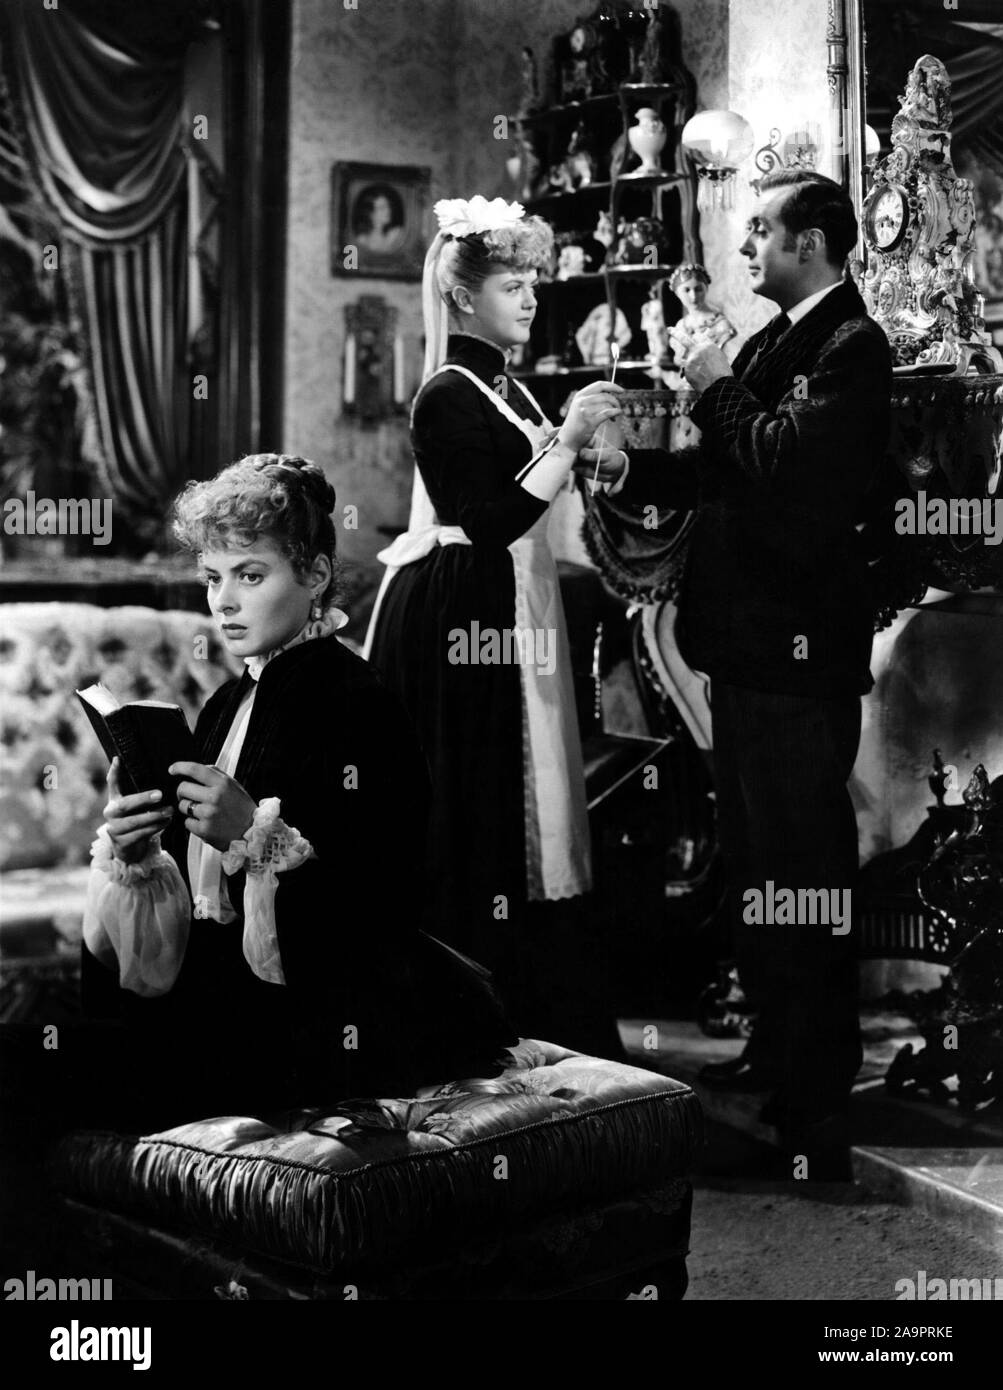 ANGELA LANSBURY, CHARLES BOYER and INGRID BERGMAN in GASLIGHT (1944), directed by GEORGE CUKOR. Credit: M.G.M / Album Stock Photo